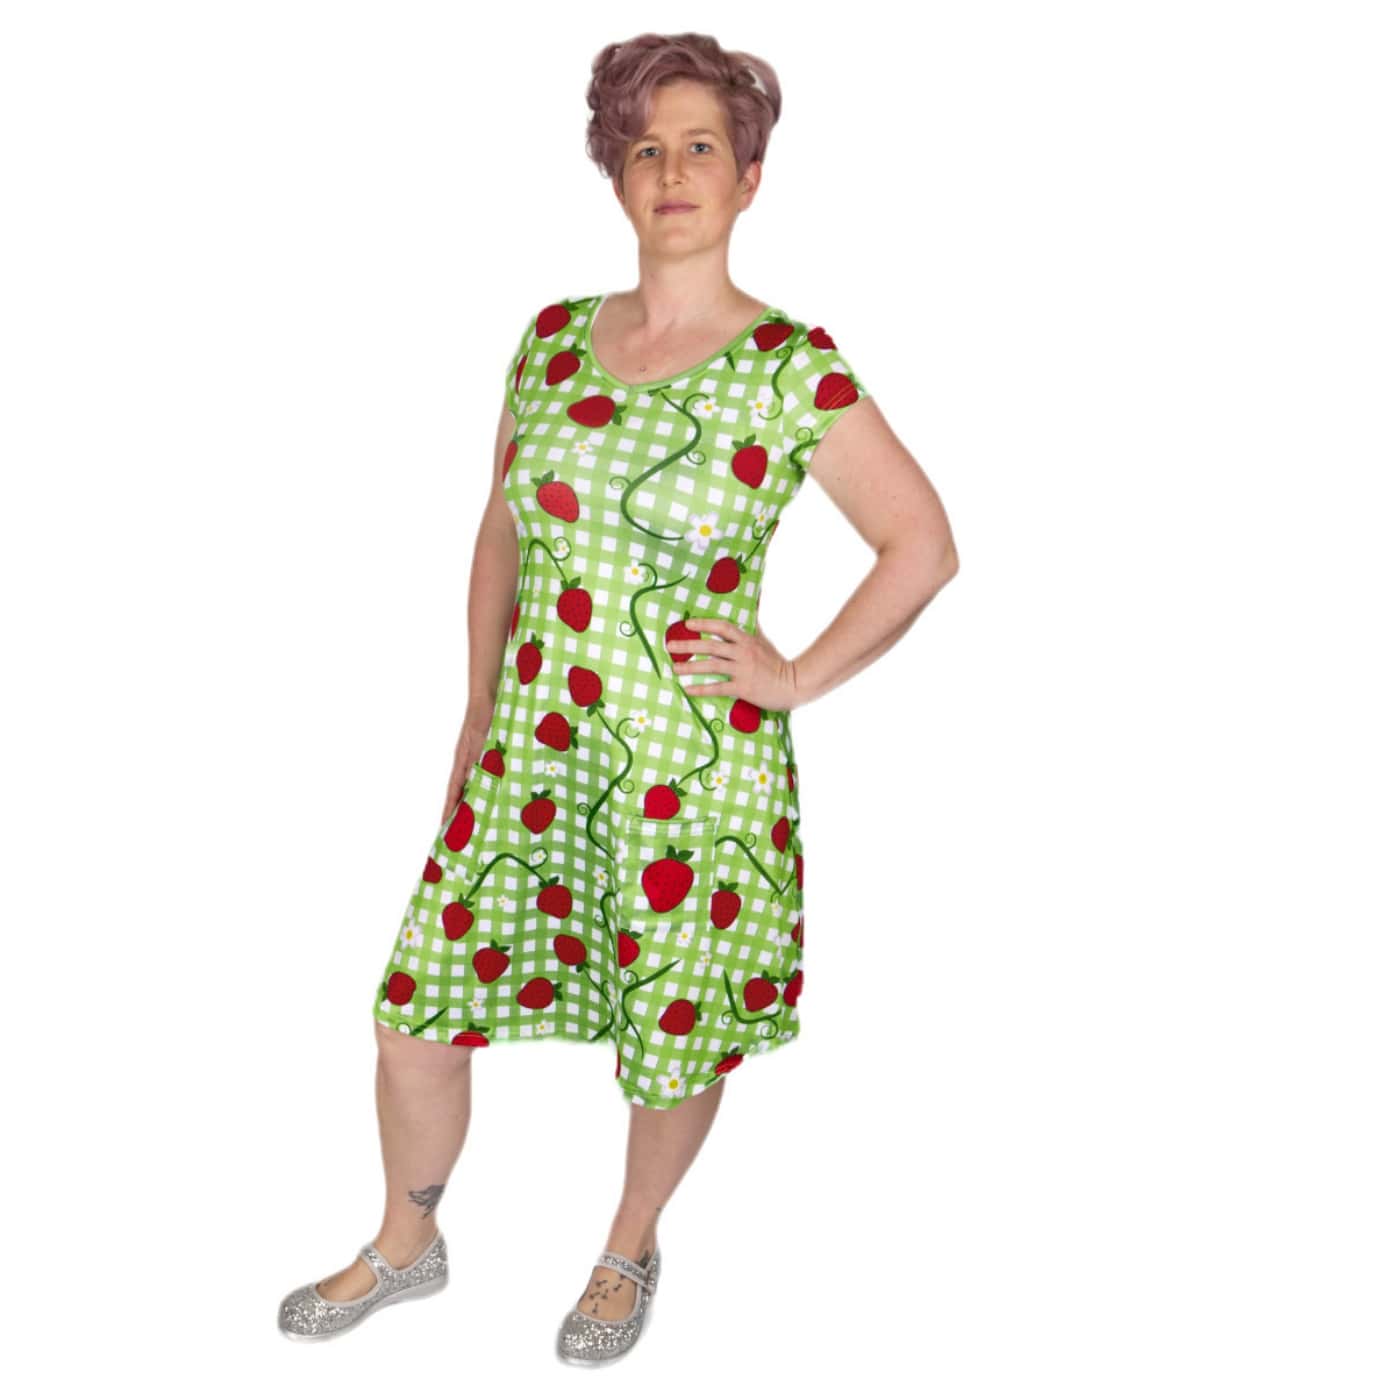 Berry Picnic Tunic Dress by RainbowsAndFairies.com.au (Strawberry Shortcake - Green Gingham - Vintage Inspired - Kitsch - Dress With Pockets - Mod) - SKU: CL_TUNDR_BPCNC_ORG - Pic-06